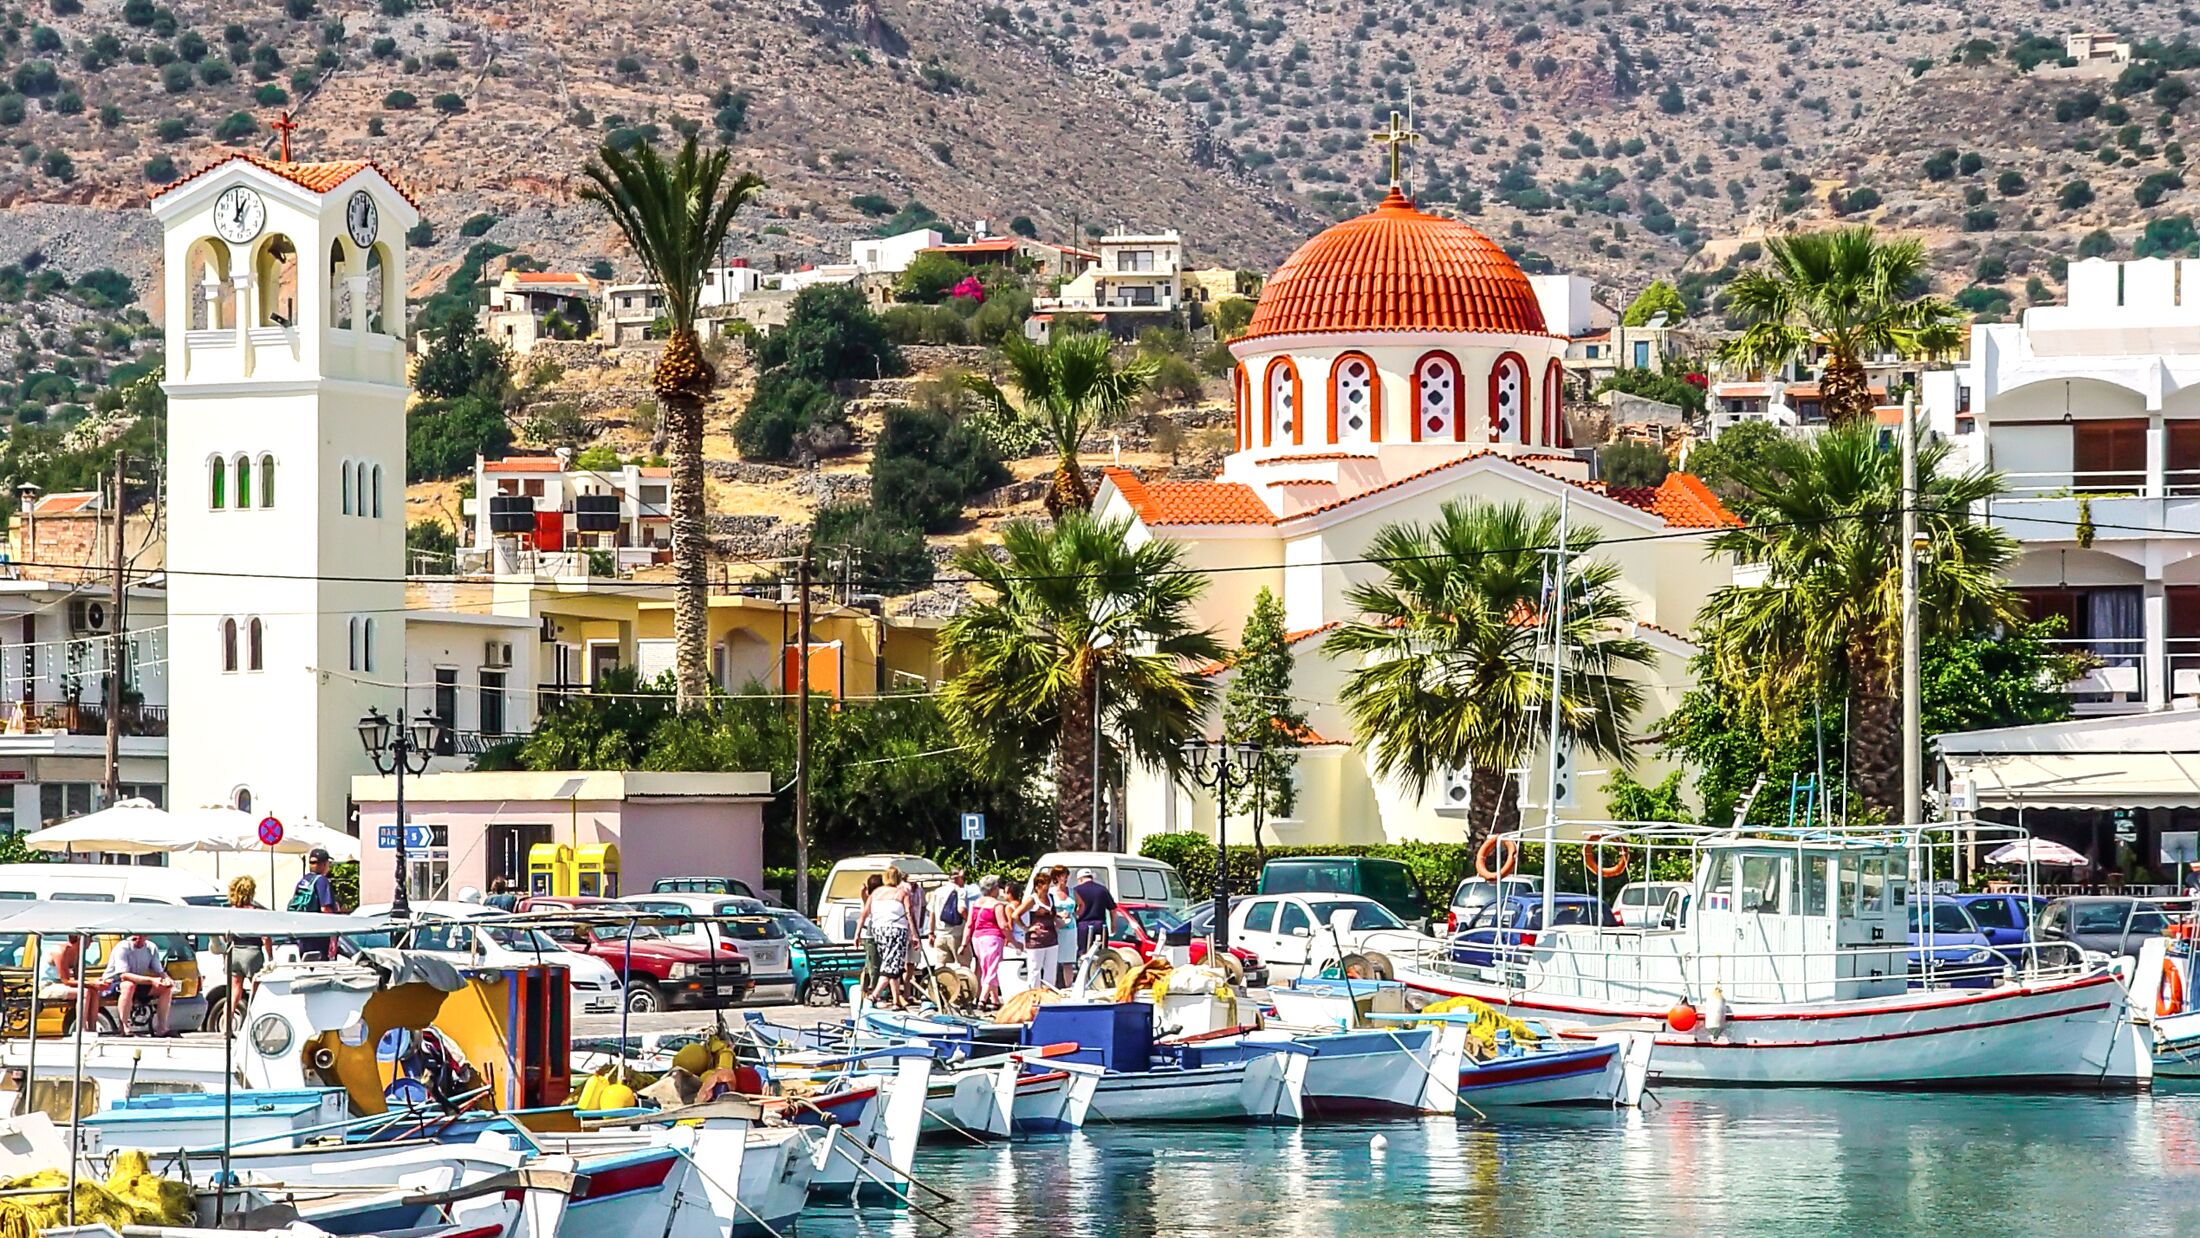 Harbor town of Elounda on the island of Crete. Greece